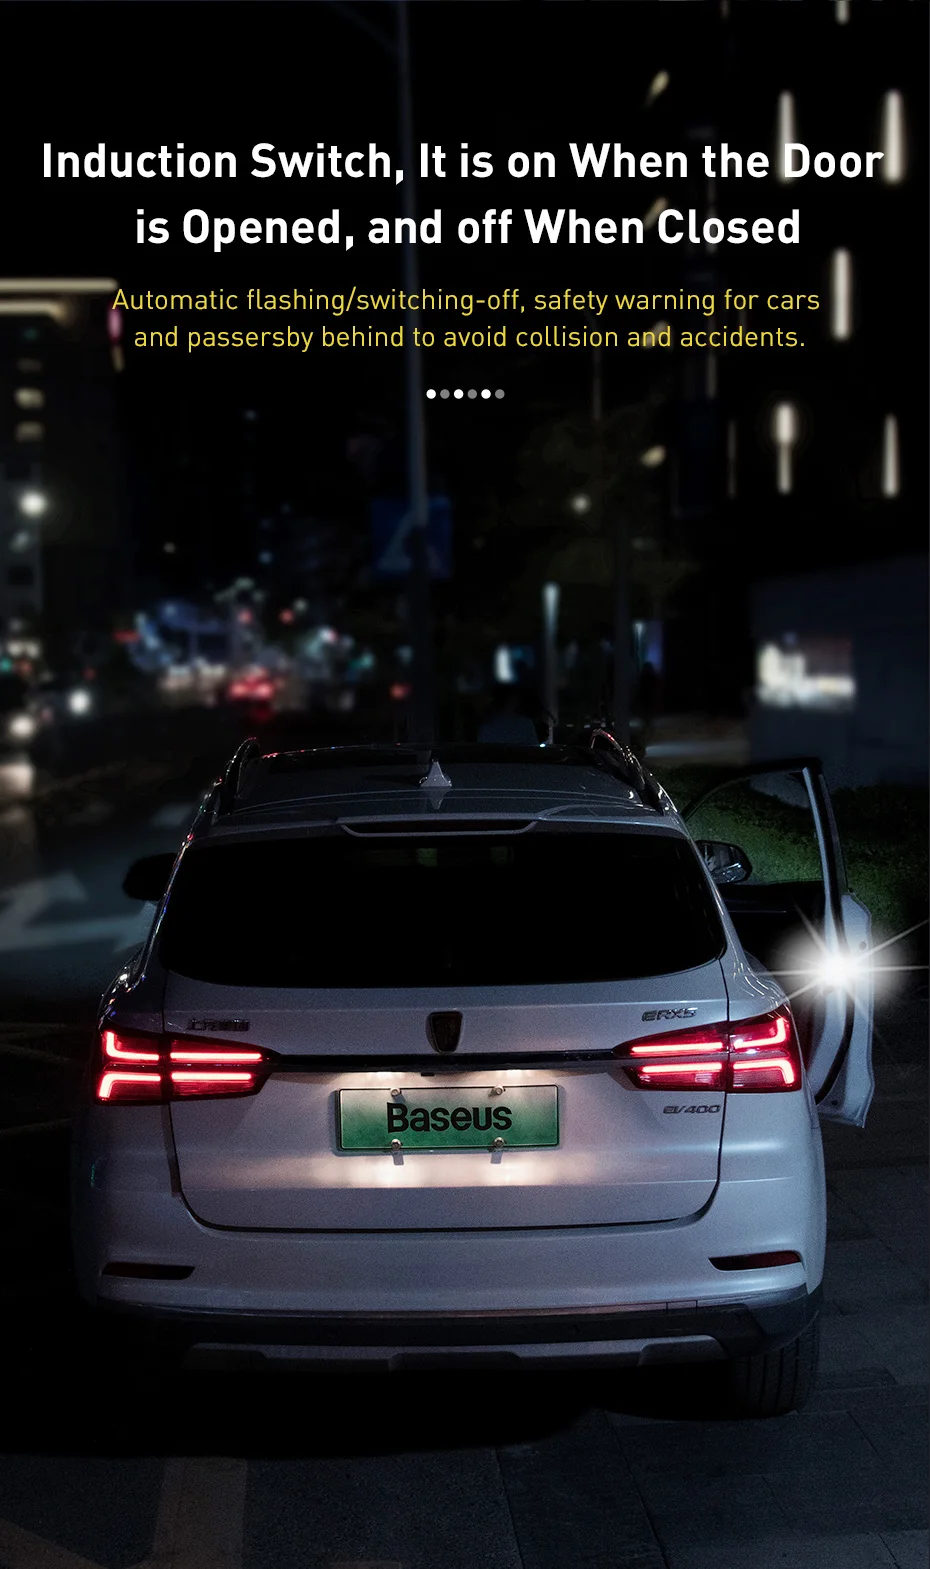 Baseus 2Pcs 6 LEDs Car Openning Door Warning Light Safety Anti-collision Flash